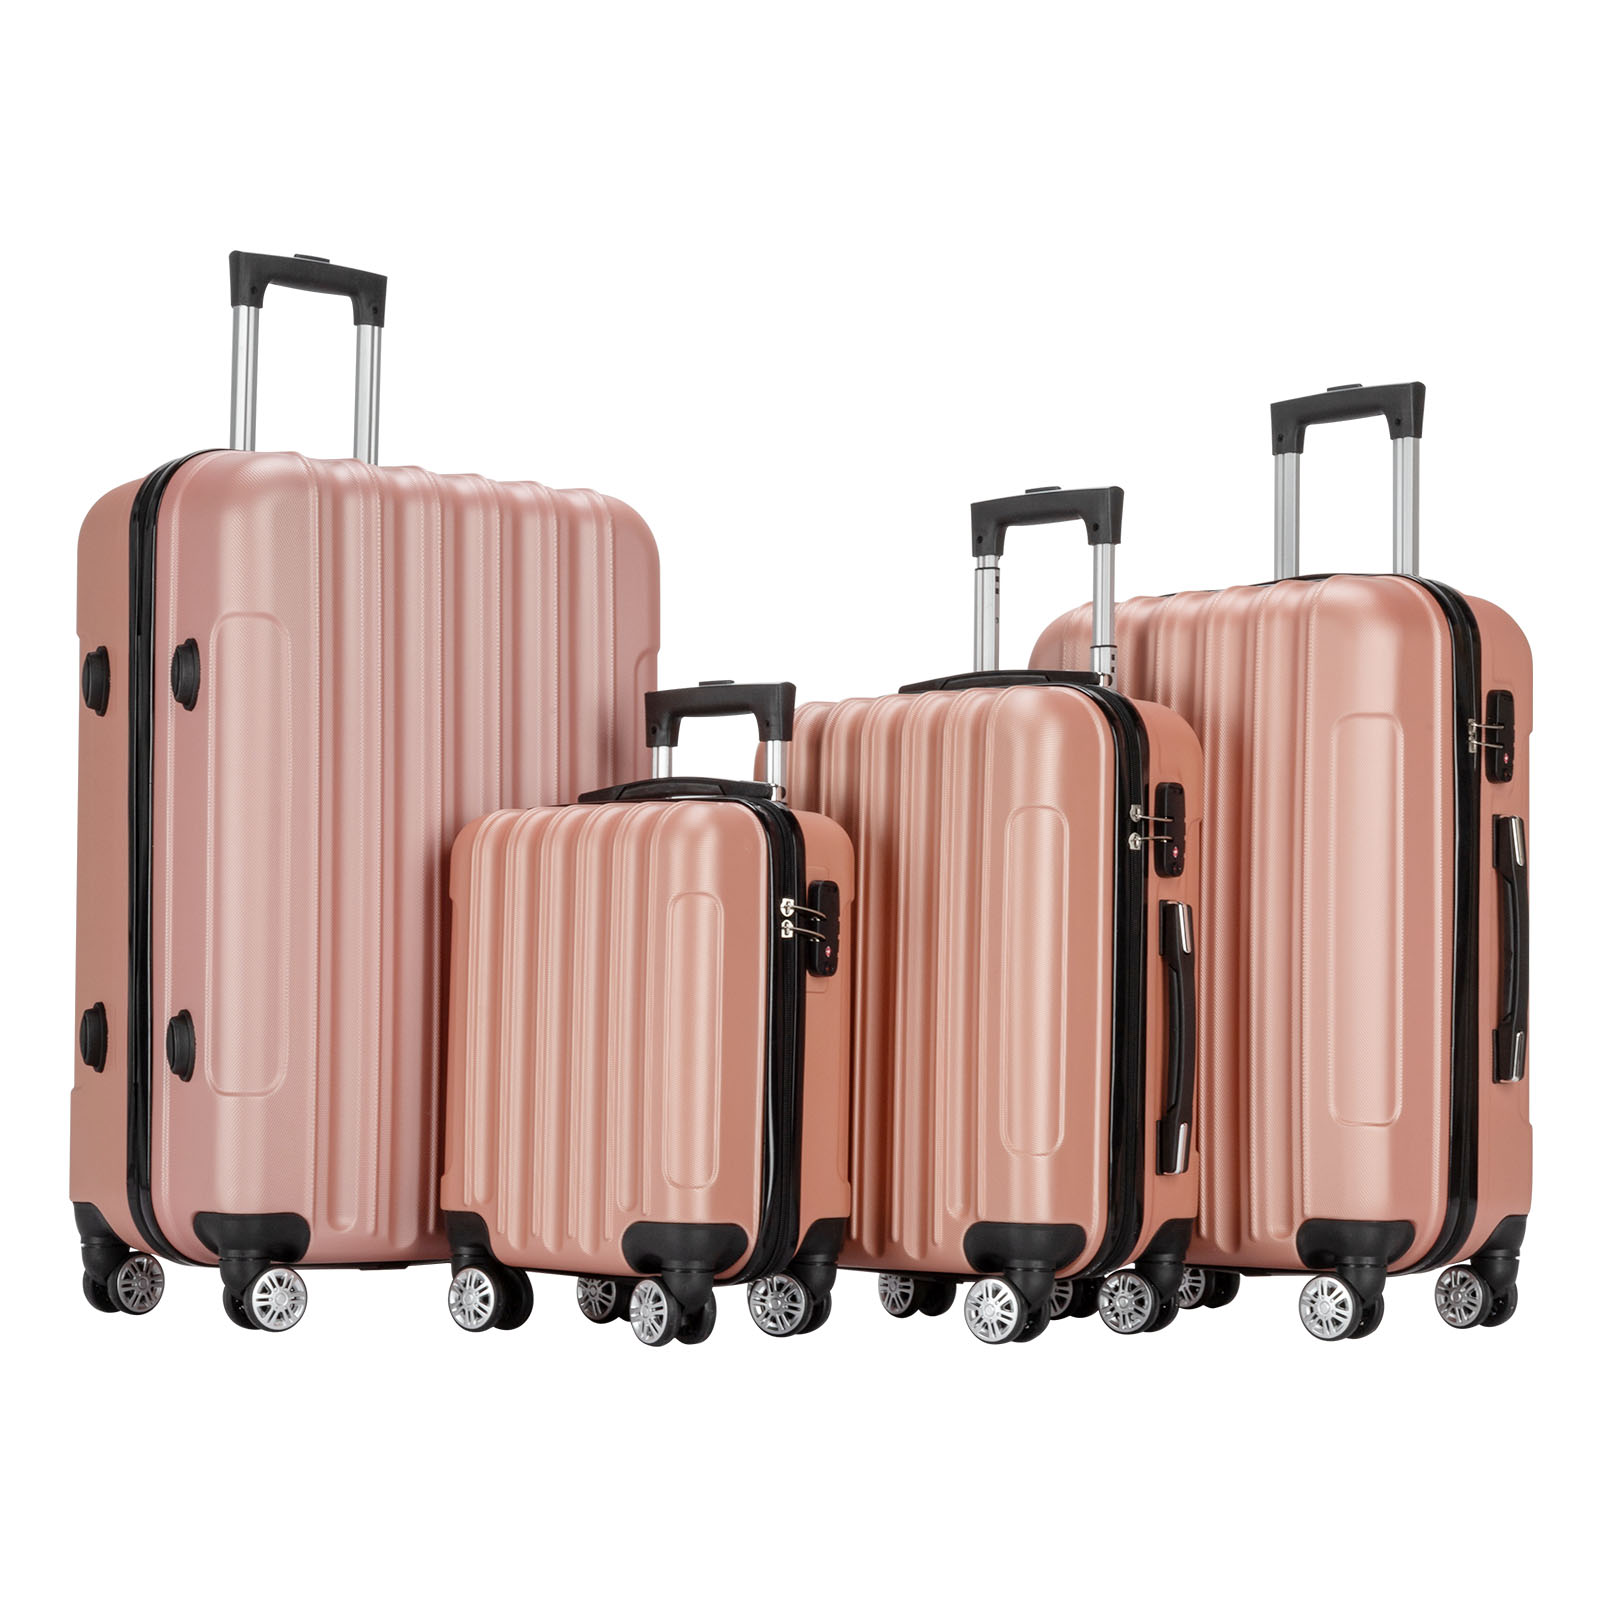 Zimtown 4 Pcs Luggage Set, Durable Travelable Suitcase with Double Wheels and TSA Lock Rose Gold - image 3 of 8